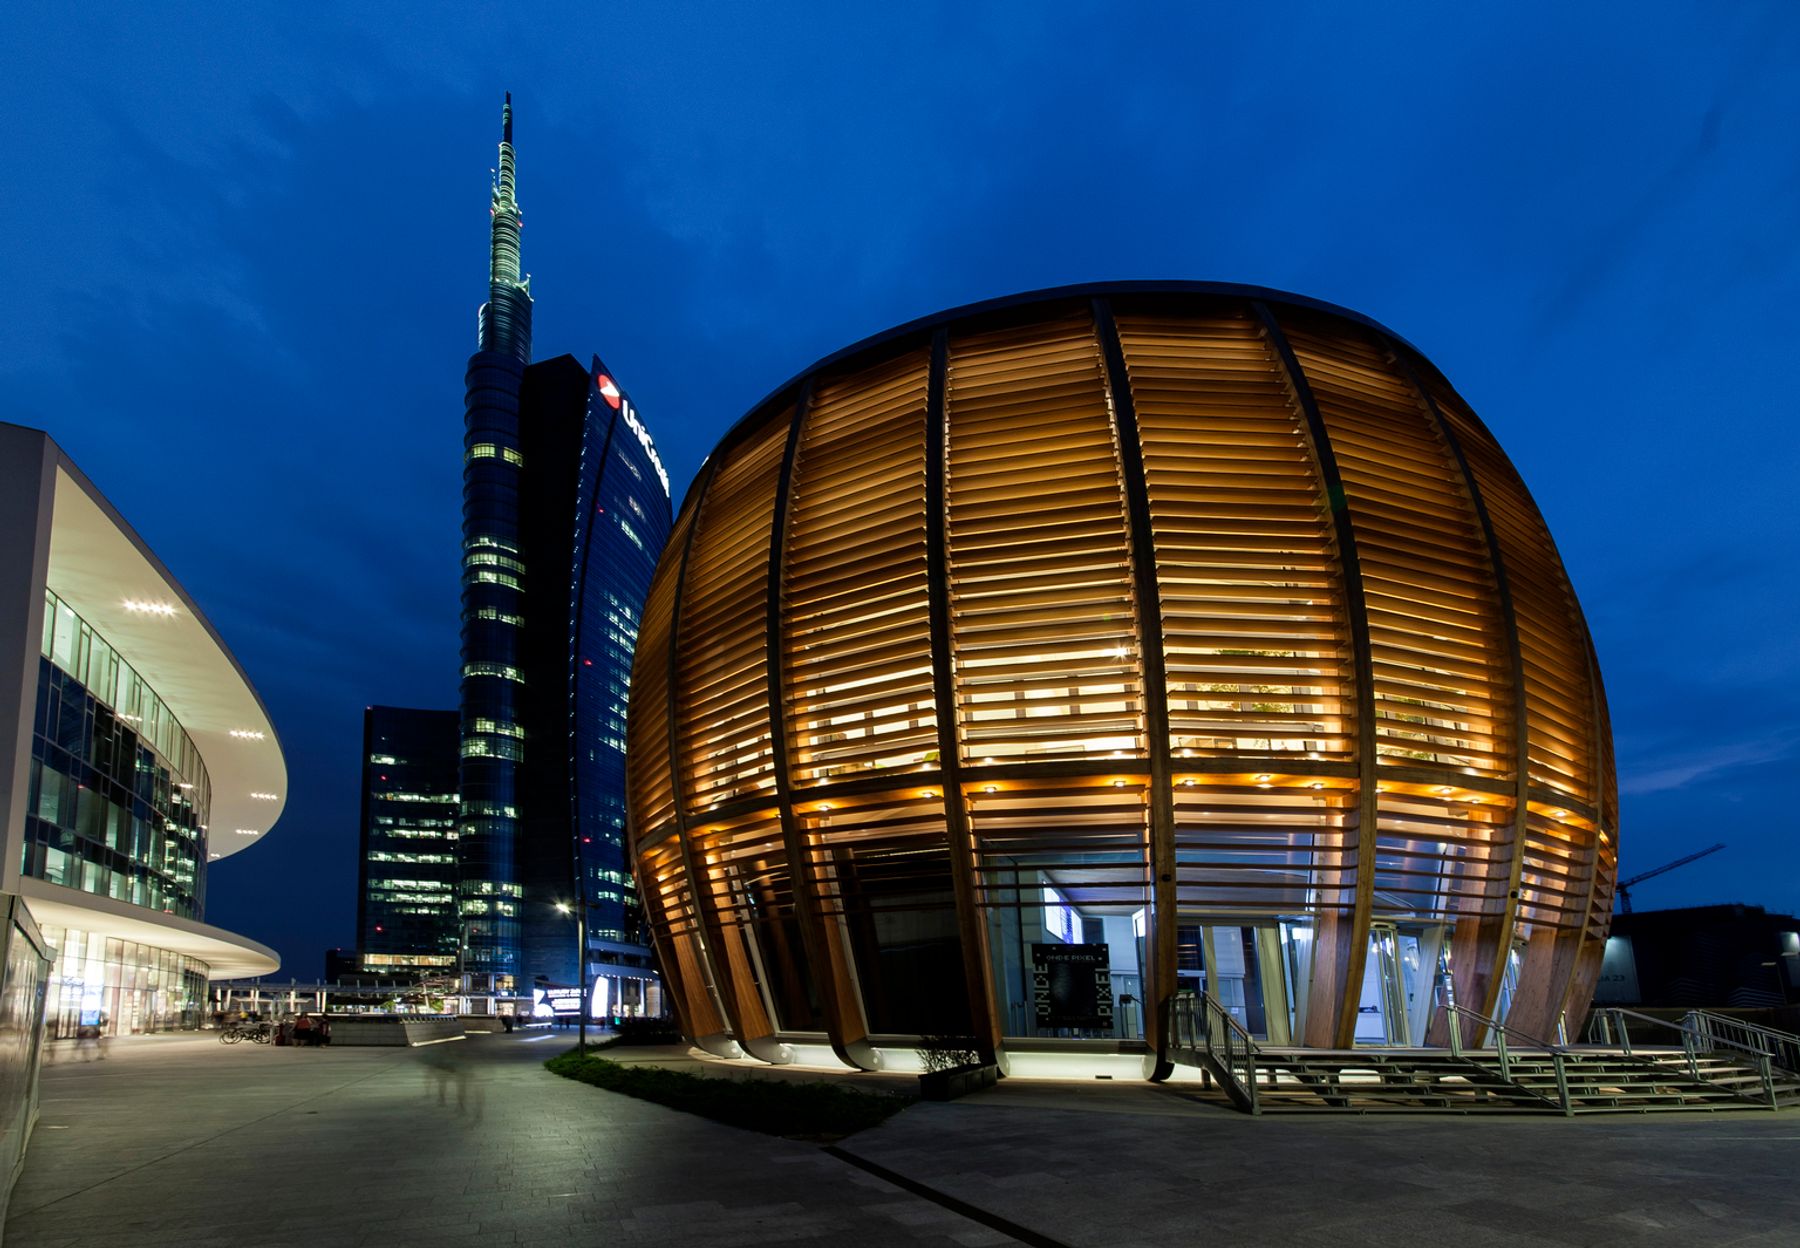 Edificio Unicredit, Milan. Architecture: aMDL Architetto Michele De Lucchi S.r.l., Milan. Lighting design: GruppoC14, Alexander Bellman, Milan. Photography: Dirk Vogel, Altena.